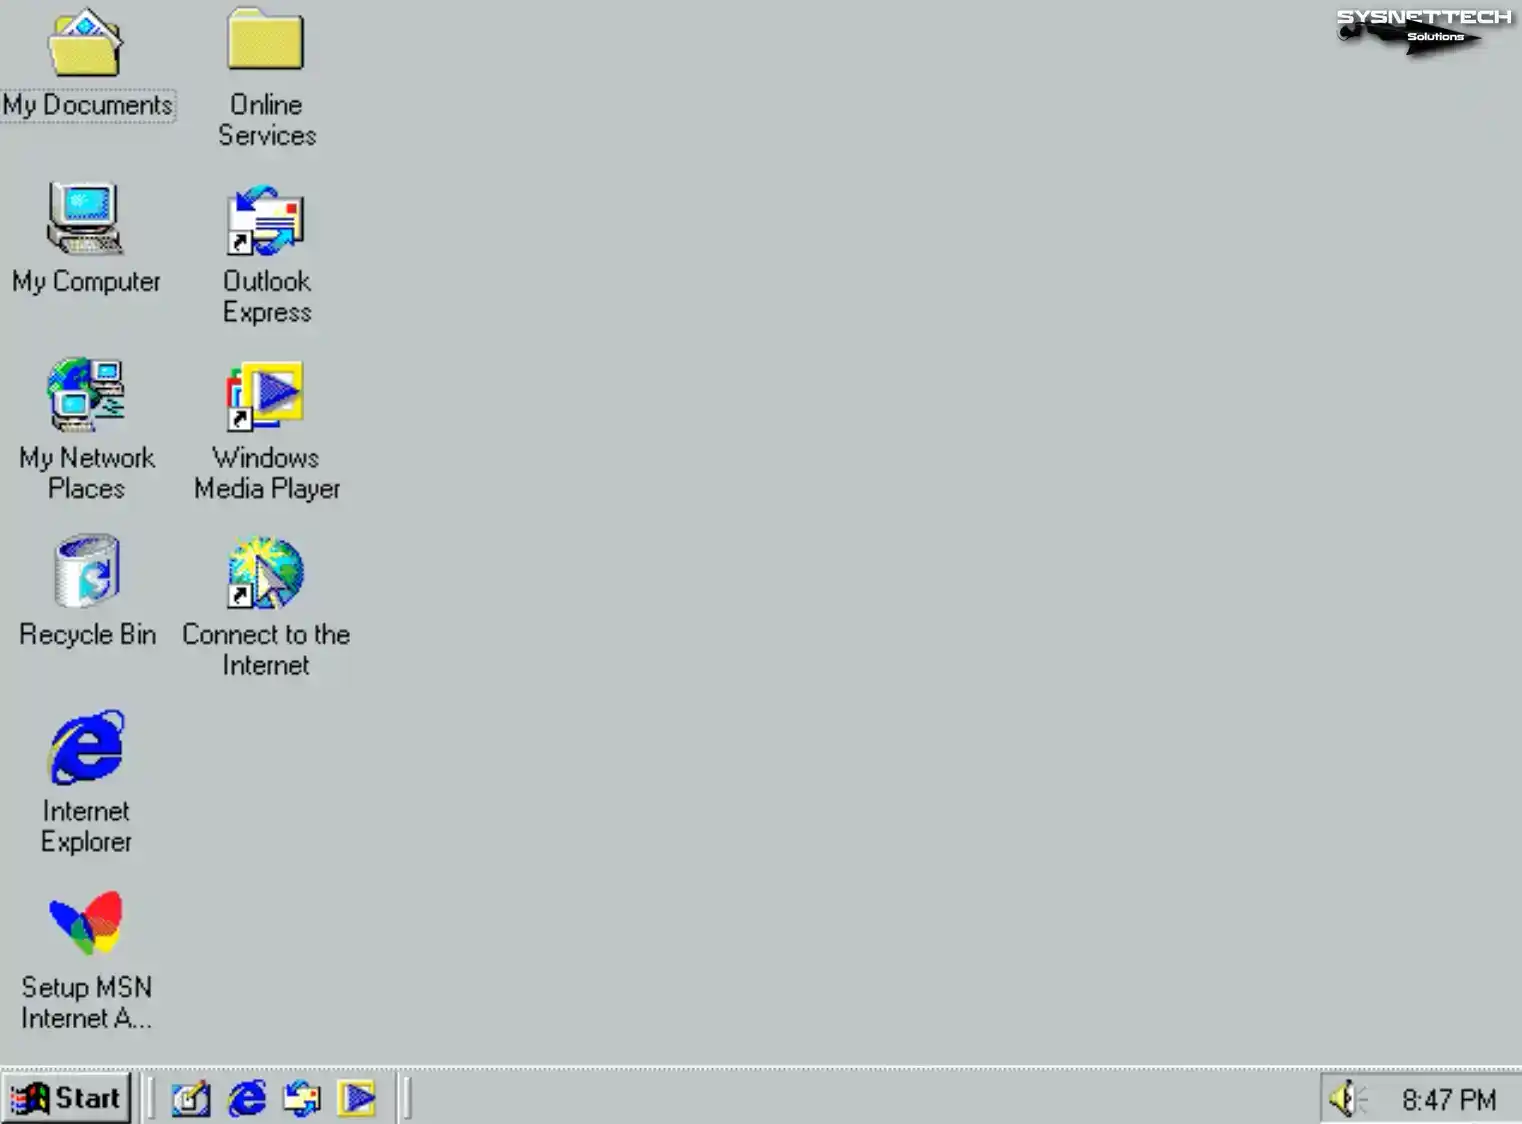 Microsoft Windows Me (Millennium)